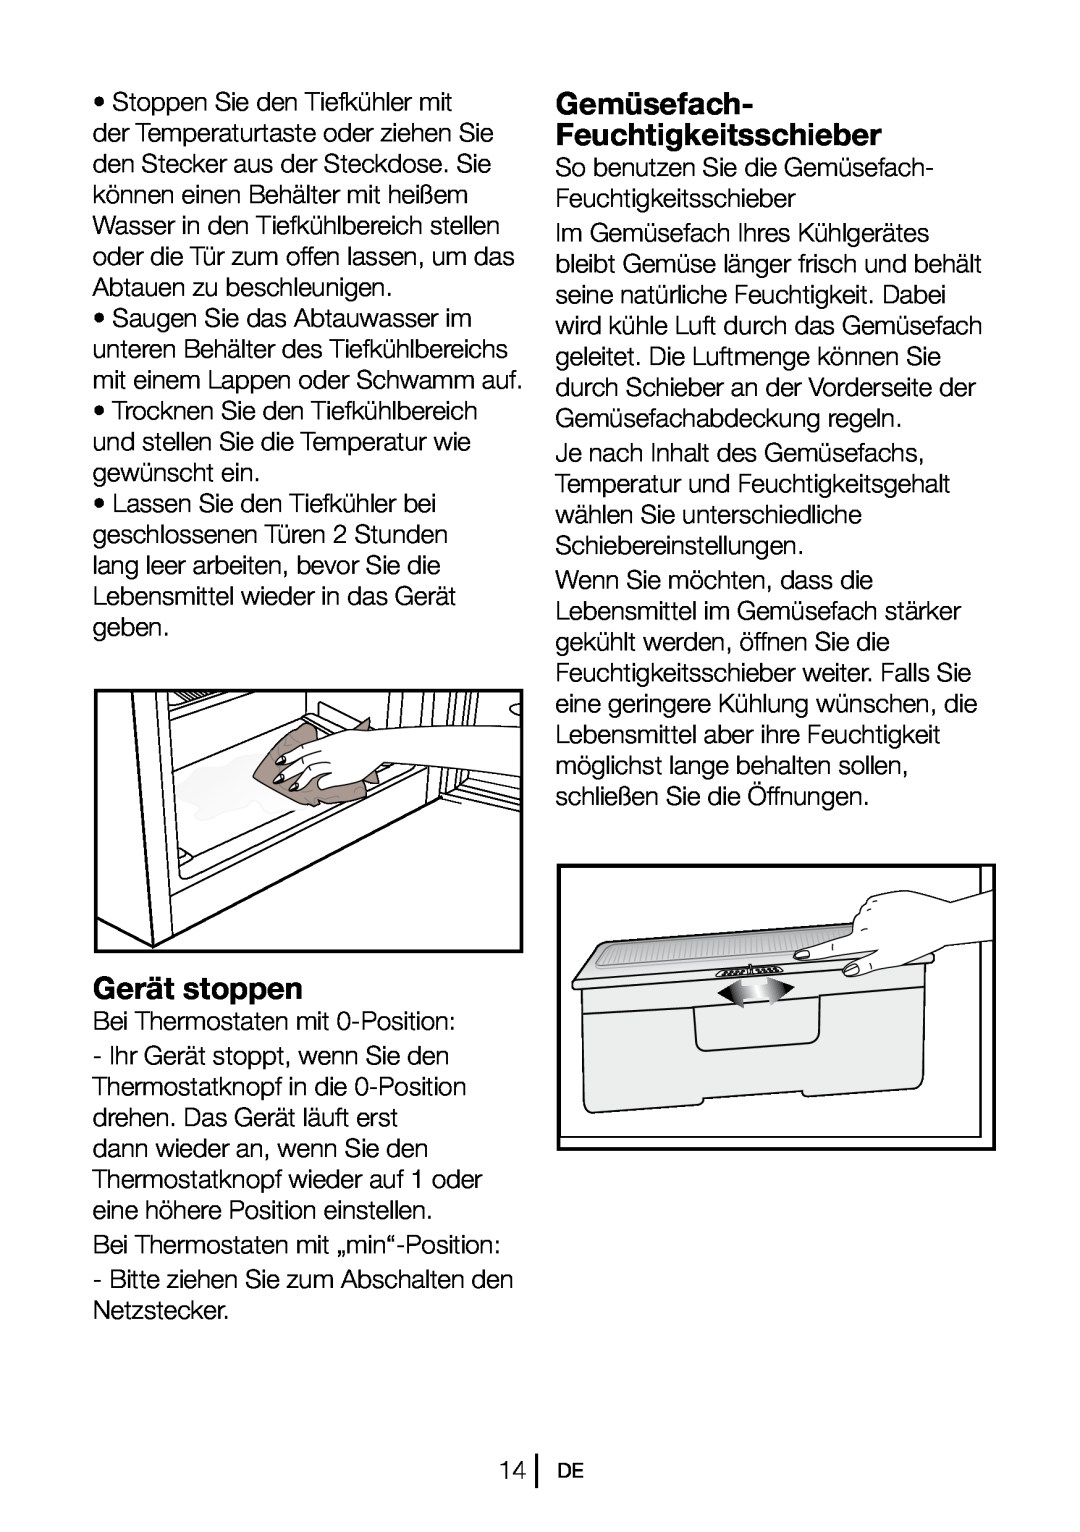 Blomberg DSM 9651 A+ manual Gemüsefach- Feuchtigkeitsschieber, Gerät stoppen 